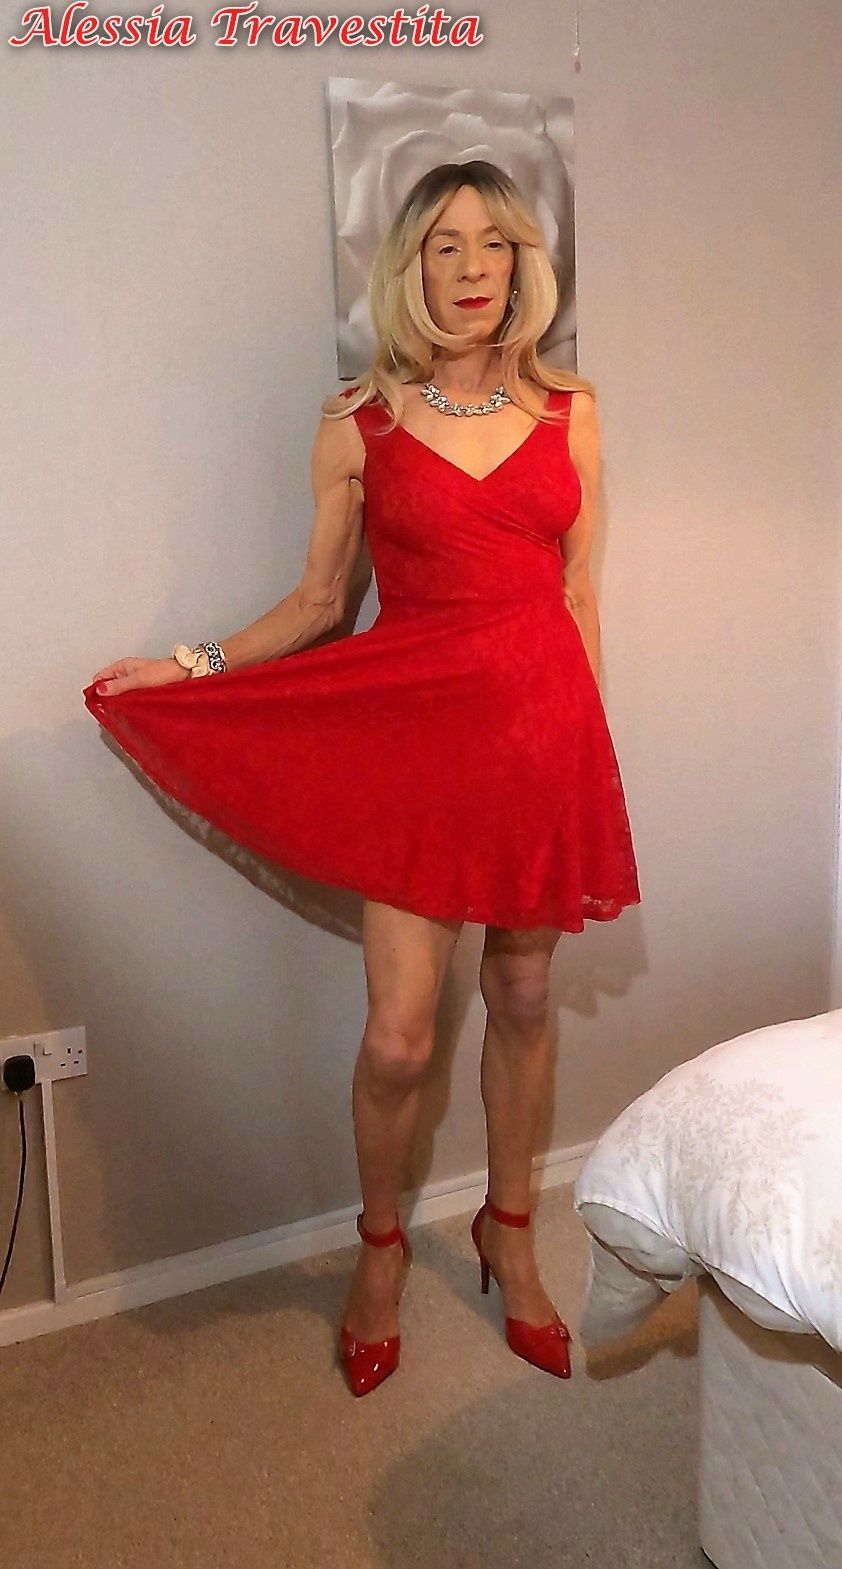 65 Alessia Travestita in Flirty Red Dress #27